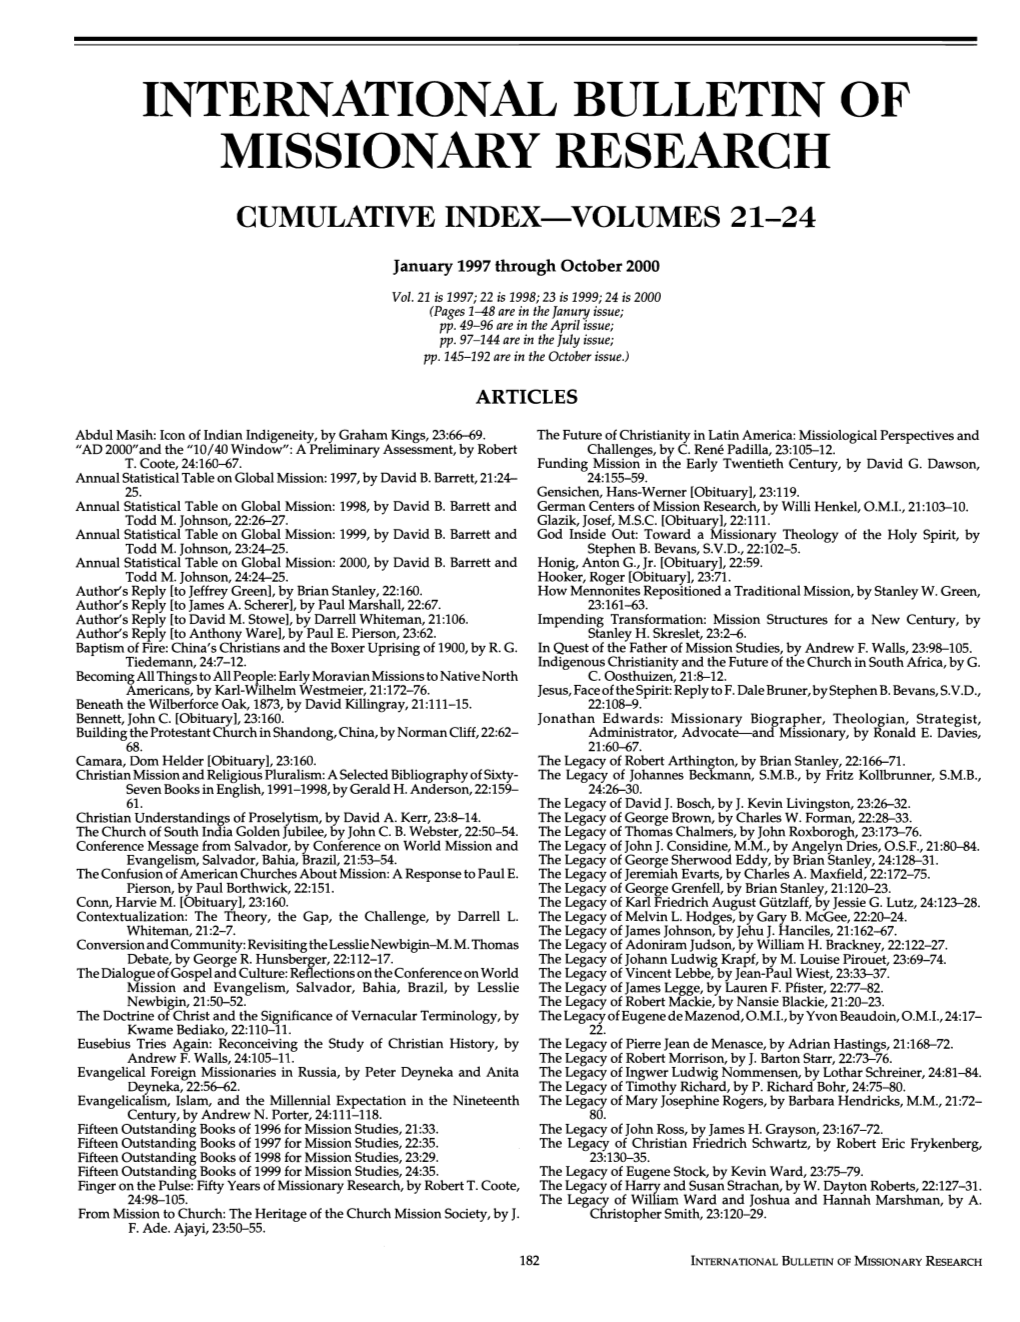 International Bulletin of Missionary Research Cumulative Index-Volumes 21-24